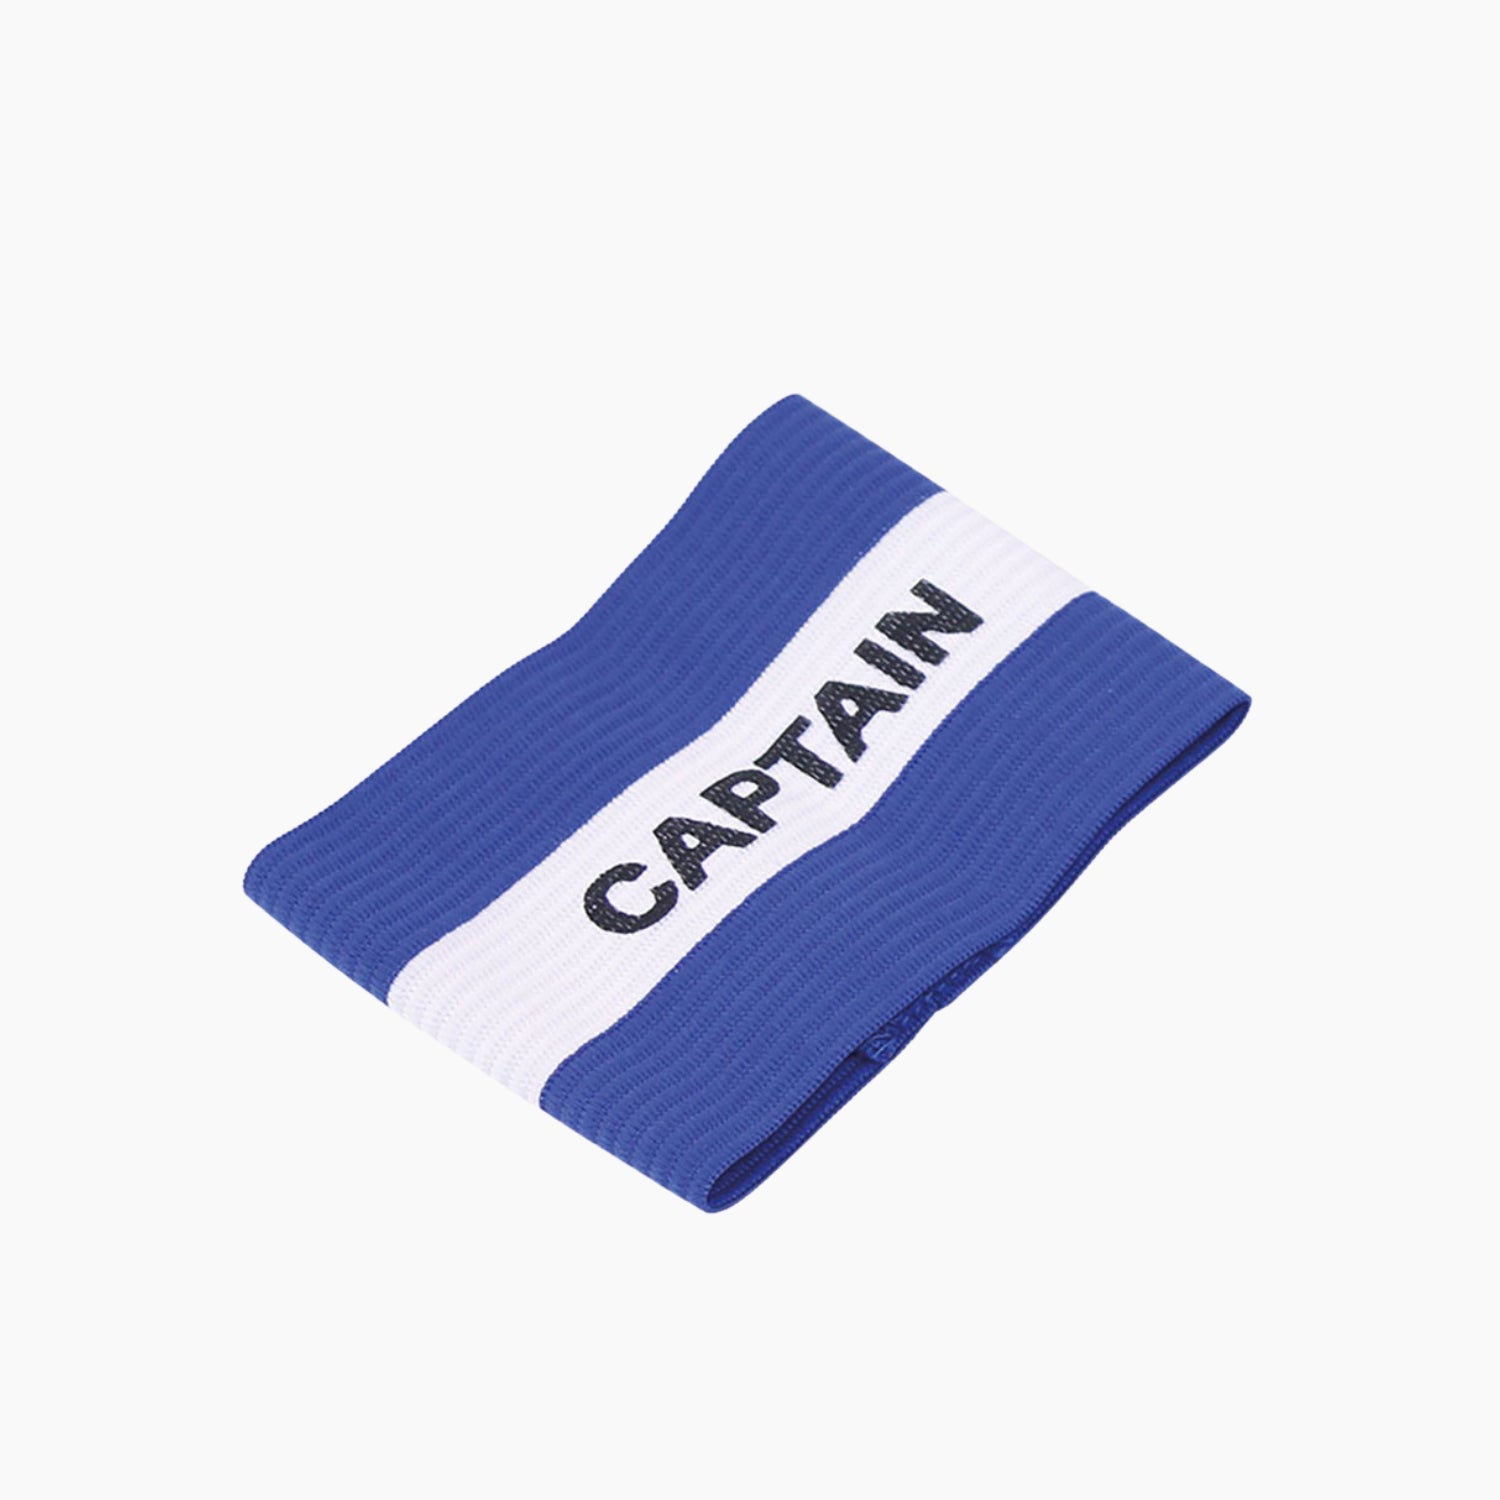 Buy Captain arm band-Splay (UK) Limited-Blue/White-Splay UK Online